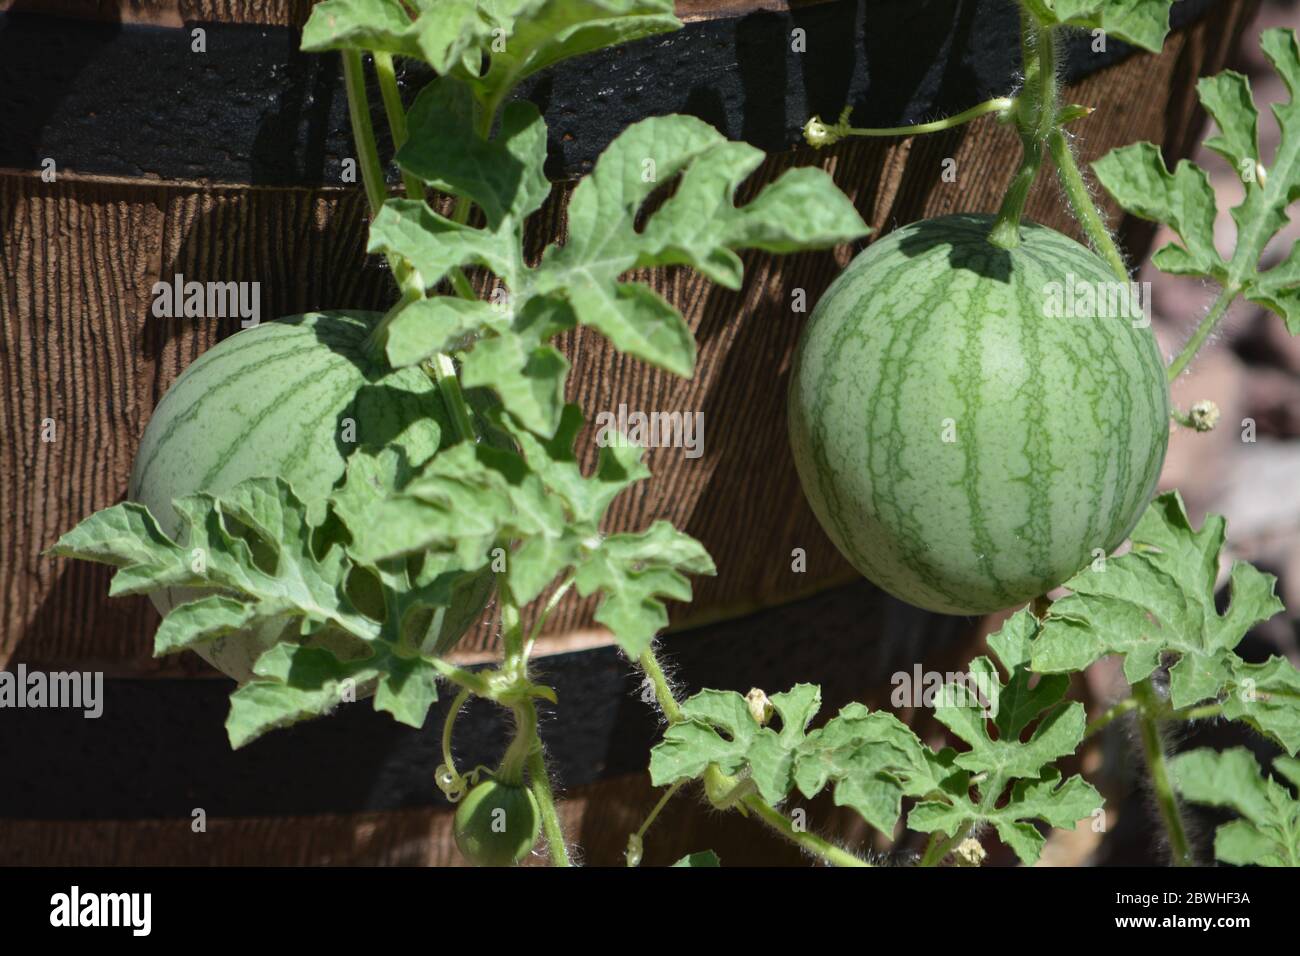 Sugar Baby Wassermelone wächst aus einem Pflanzgefäß. Arizona USA  Stockfotografie - Alamy